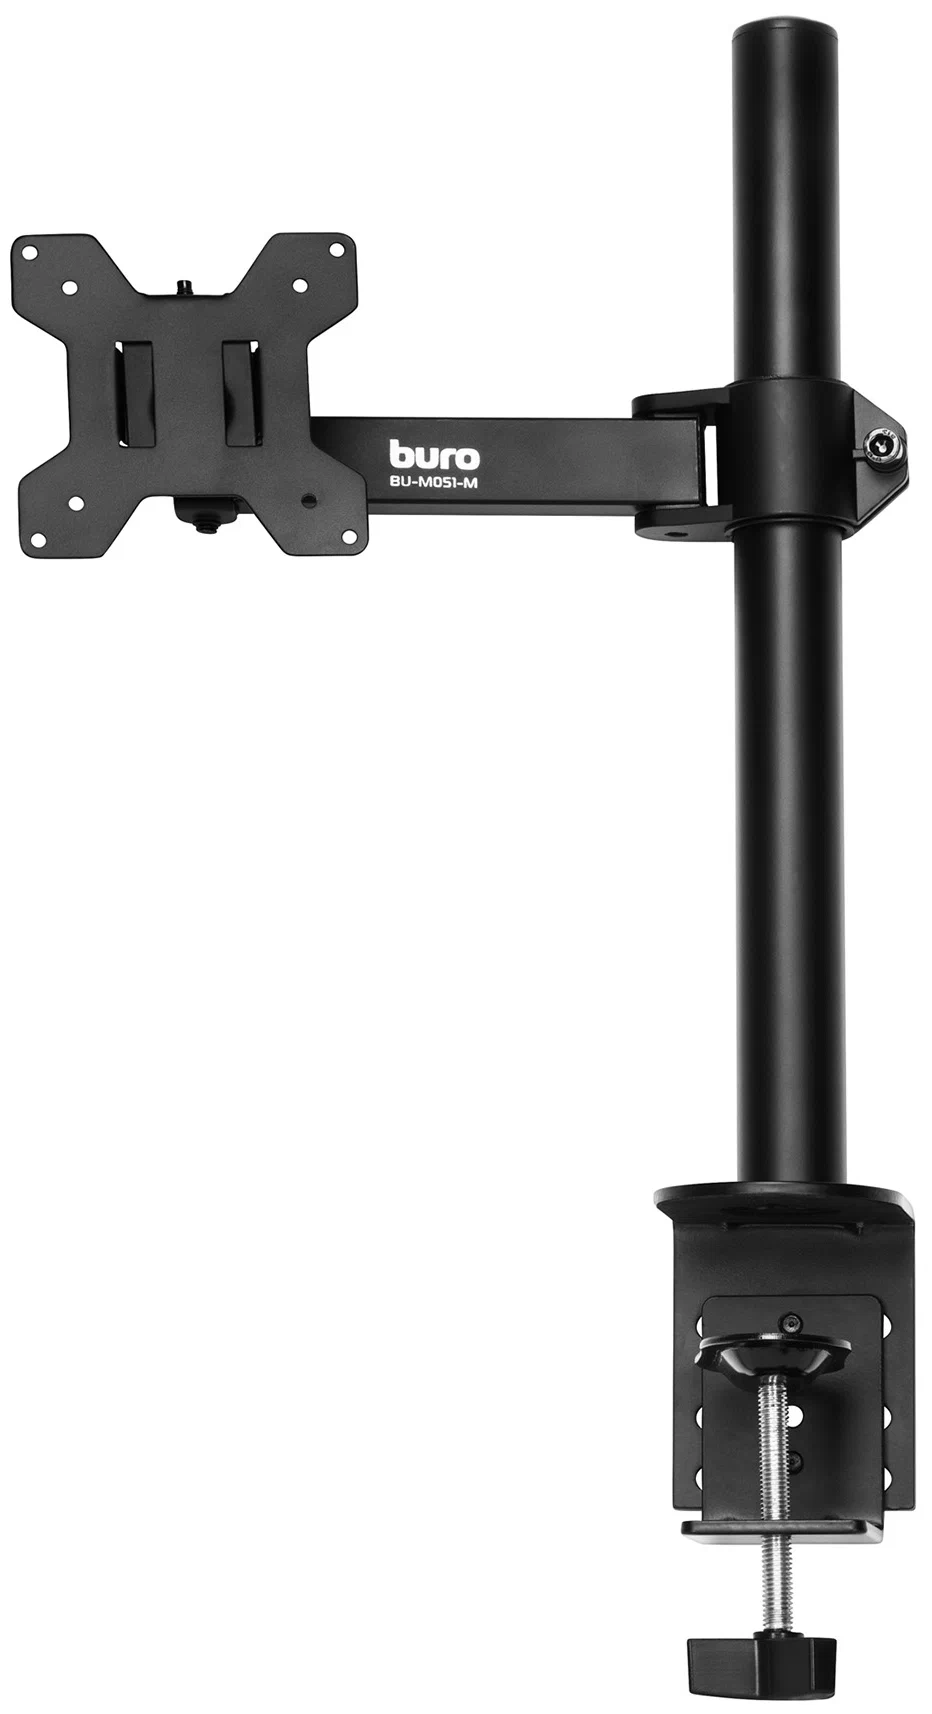 Buro BU-M051-M